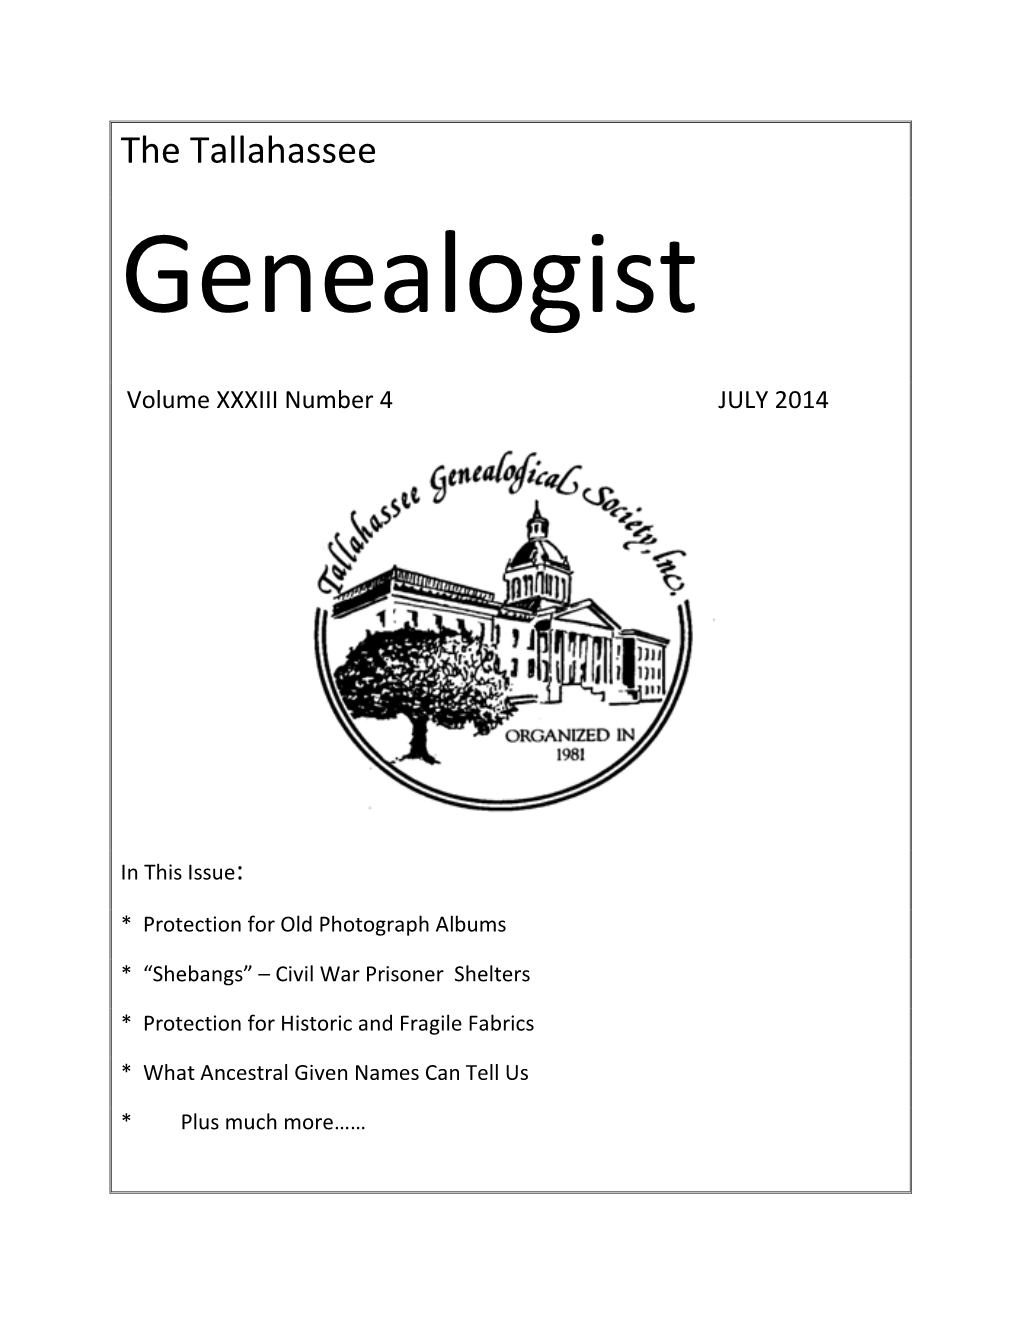 The Tallahassee Genealogist